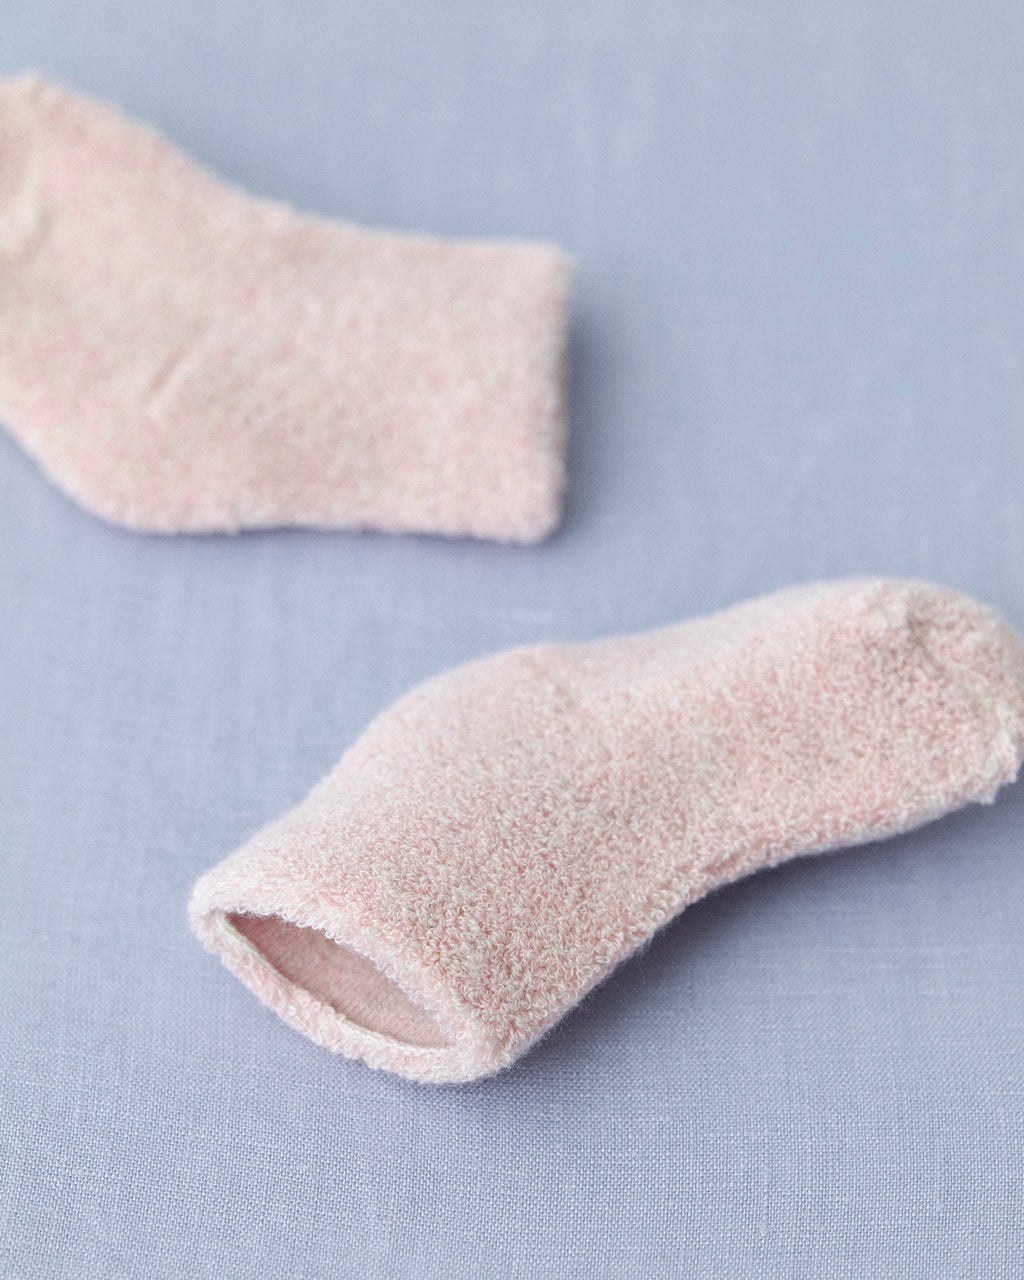 Cotton Baby Socks: Pink